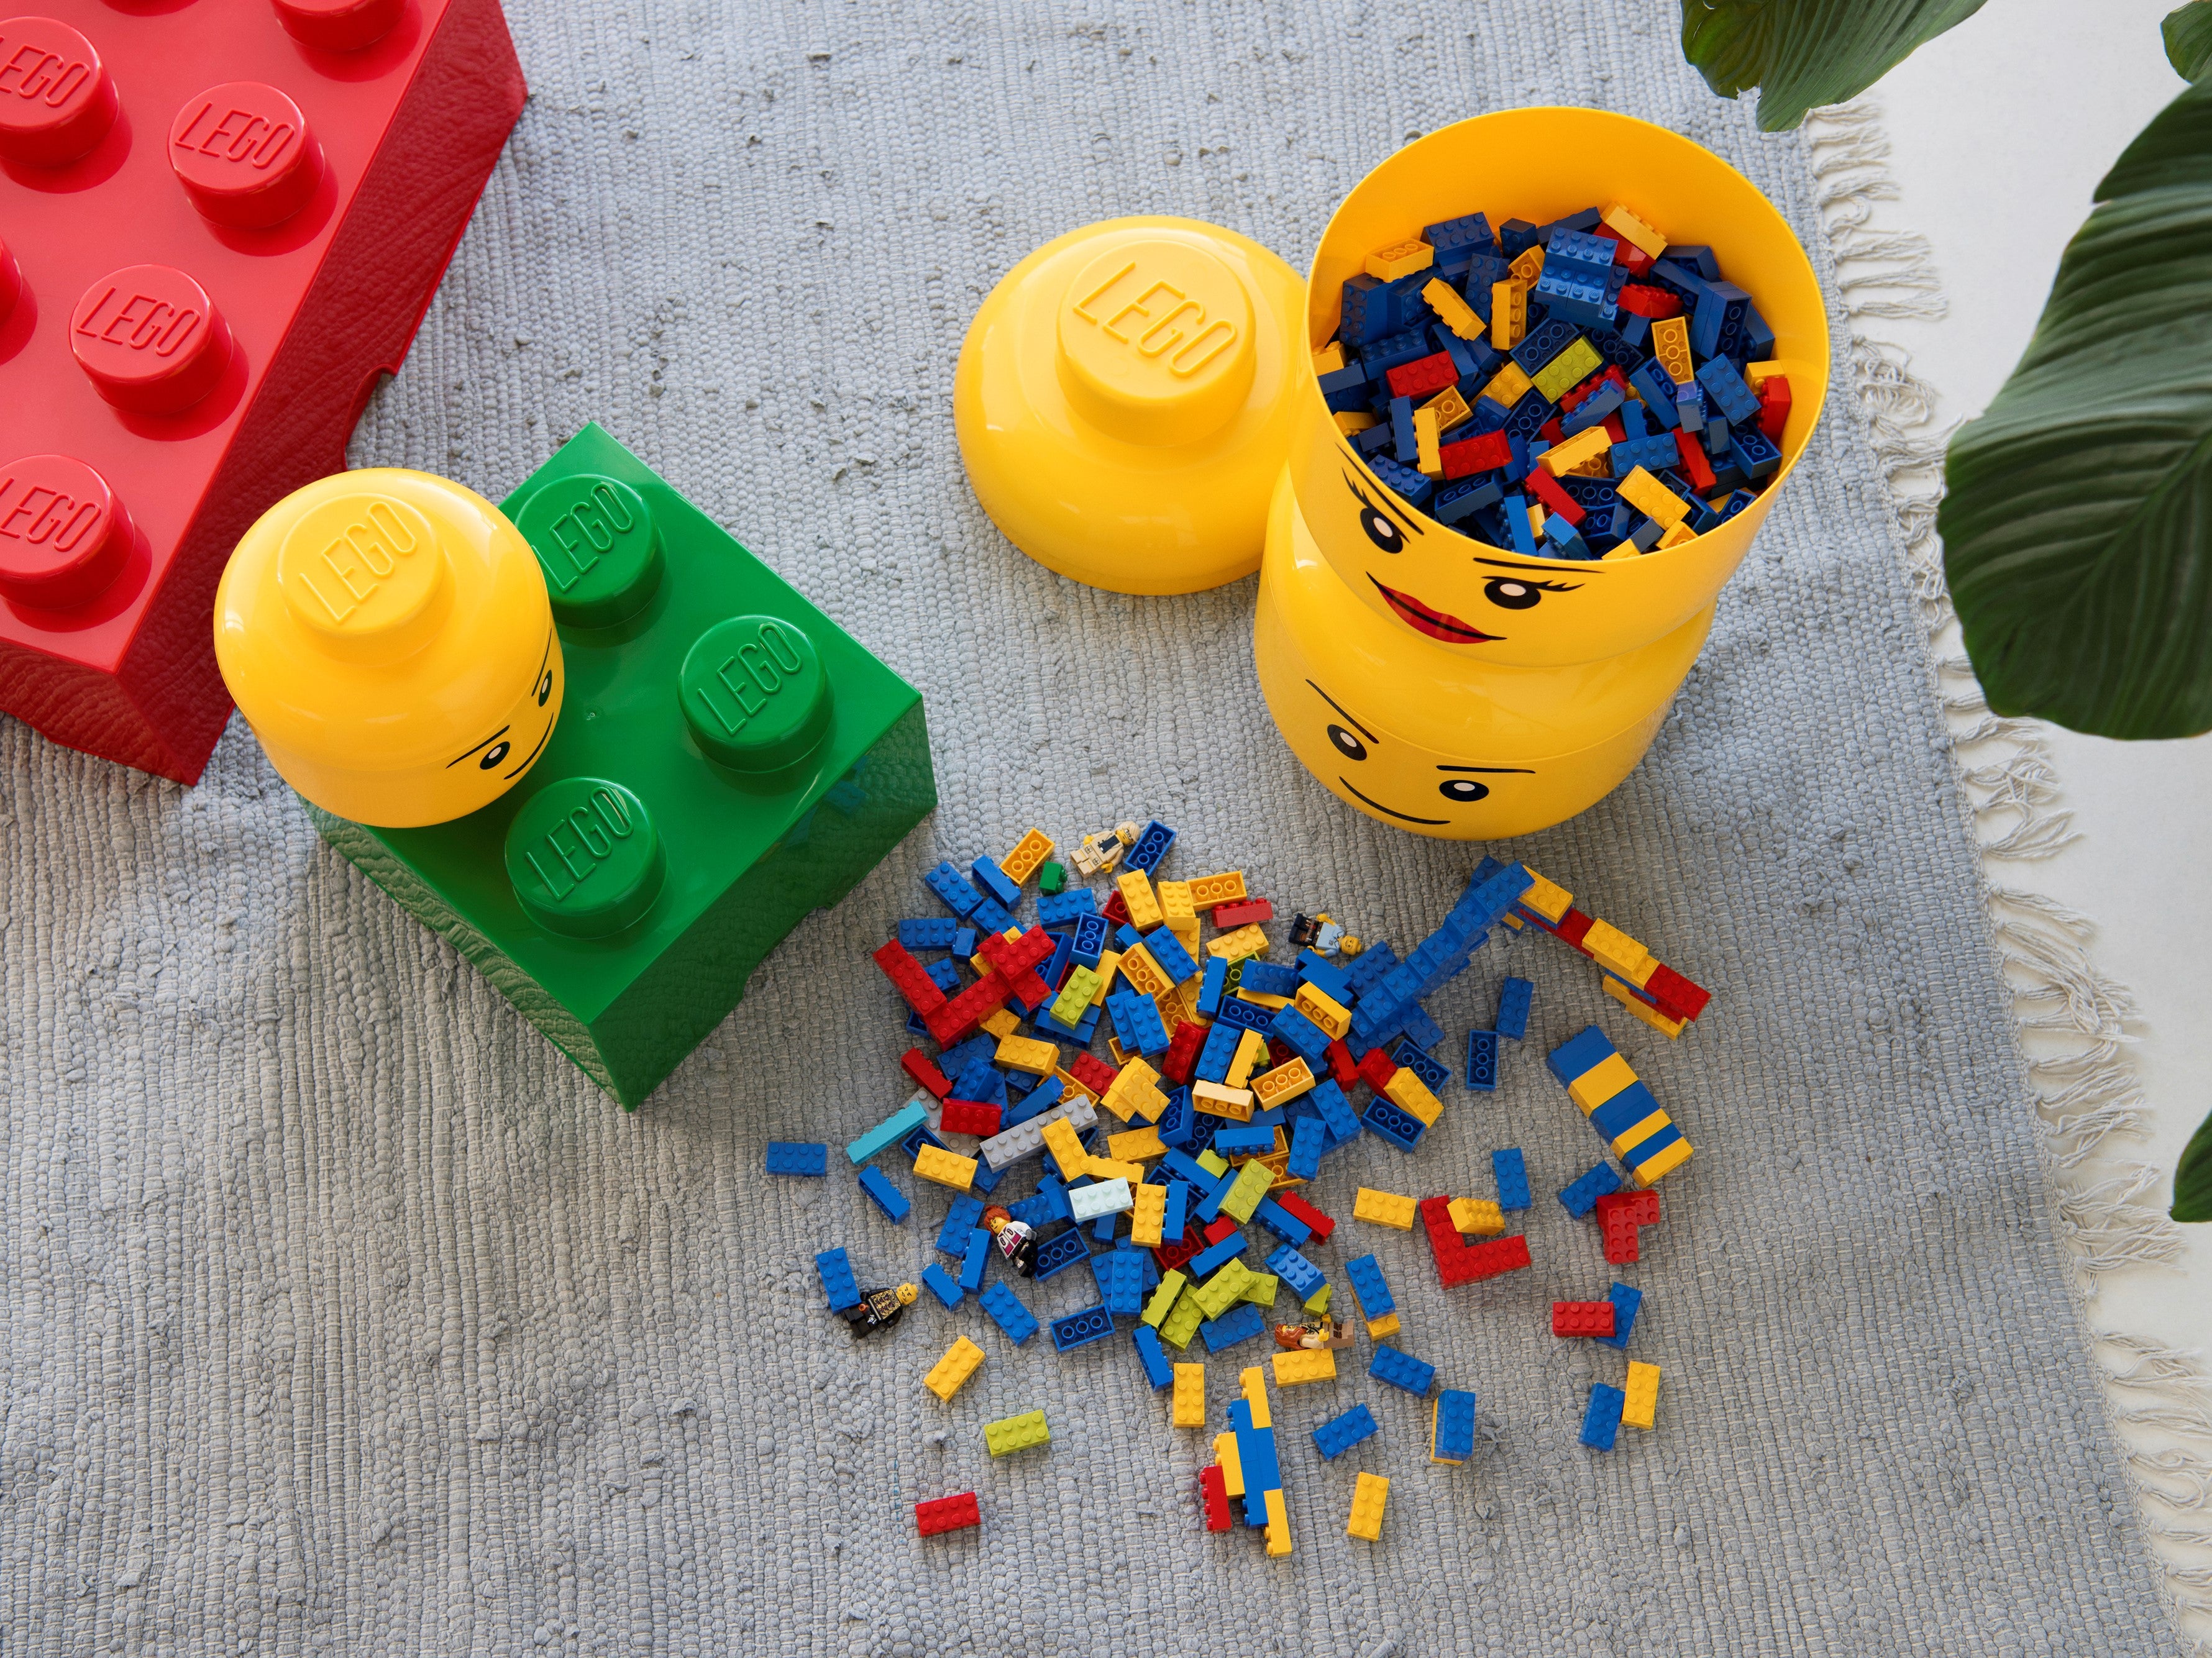 Lego Storage Head S Stackable & Fits Lego Storage Bricks For More Storage Fun